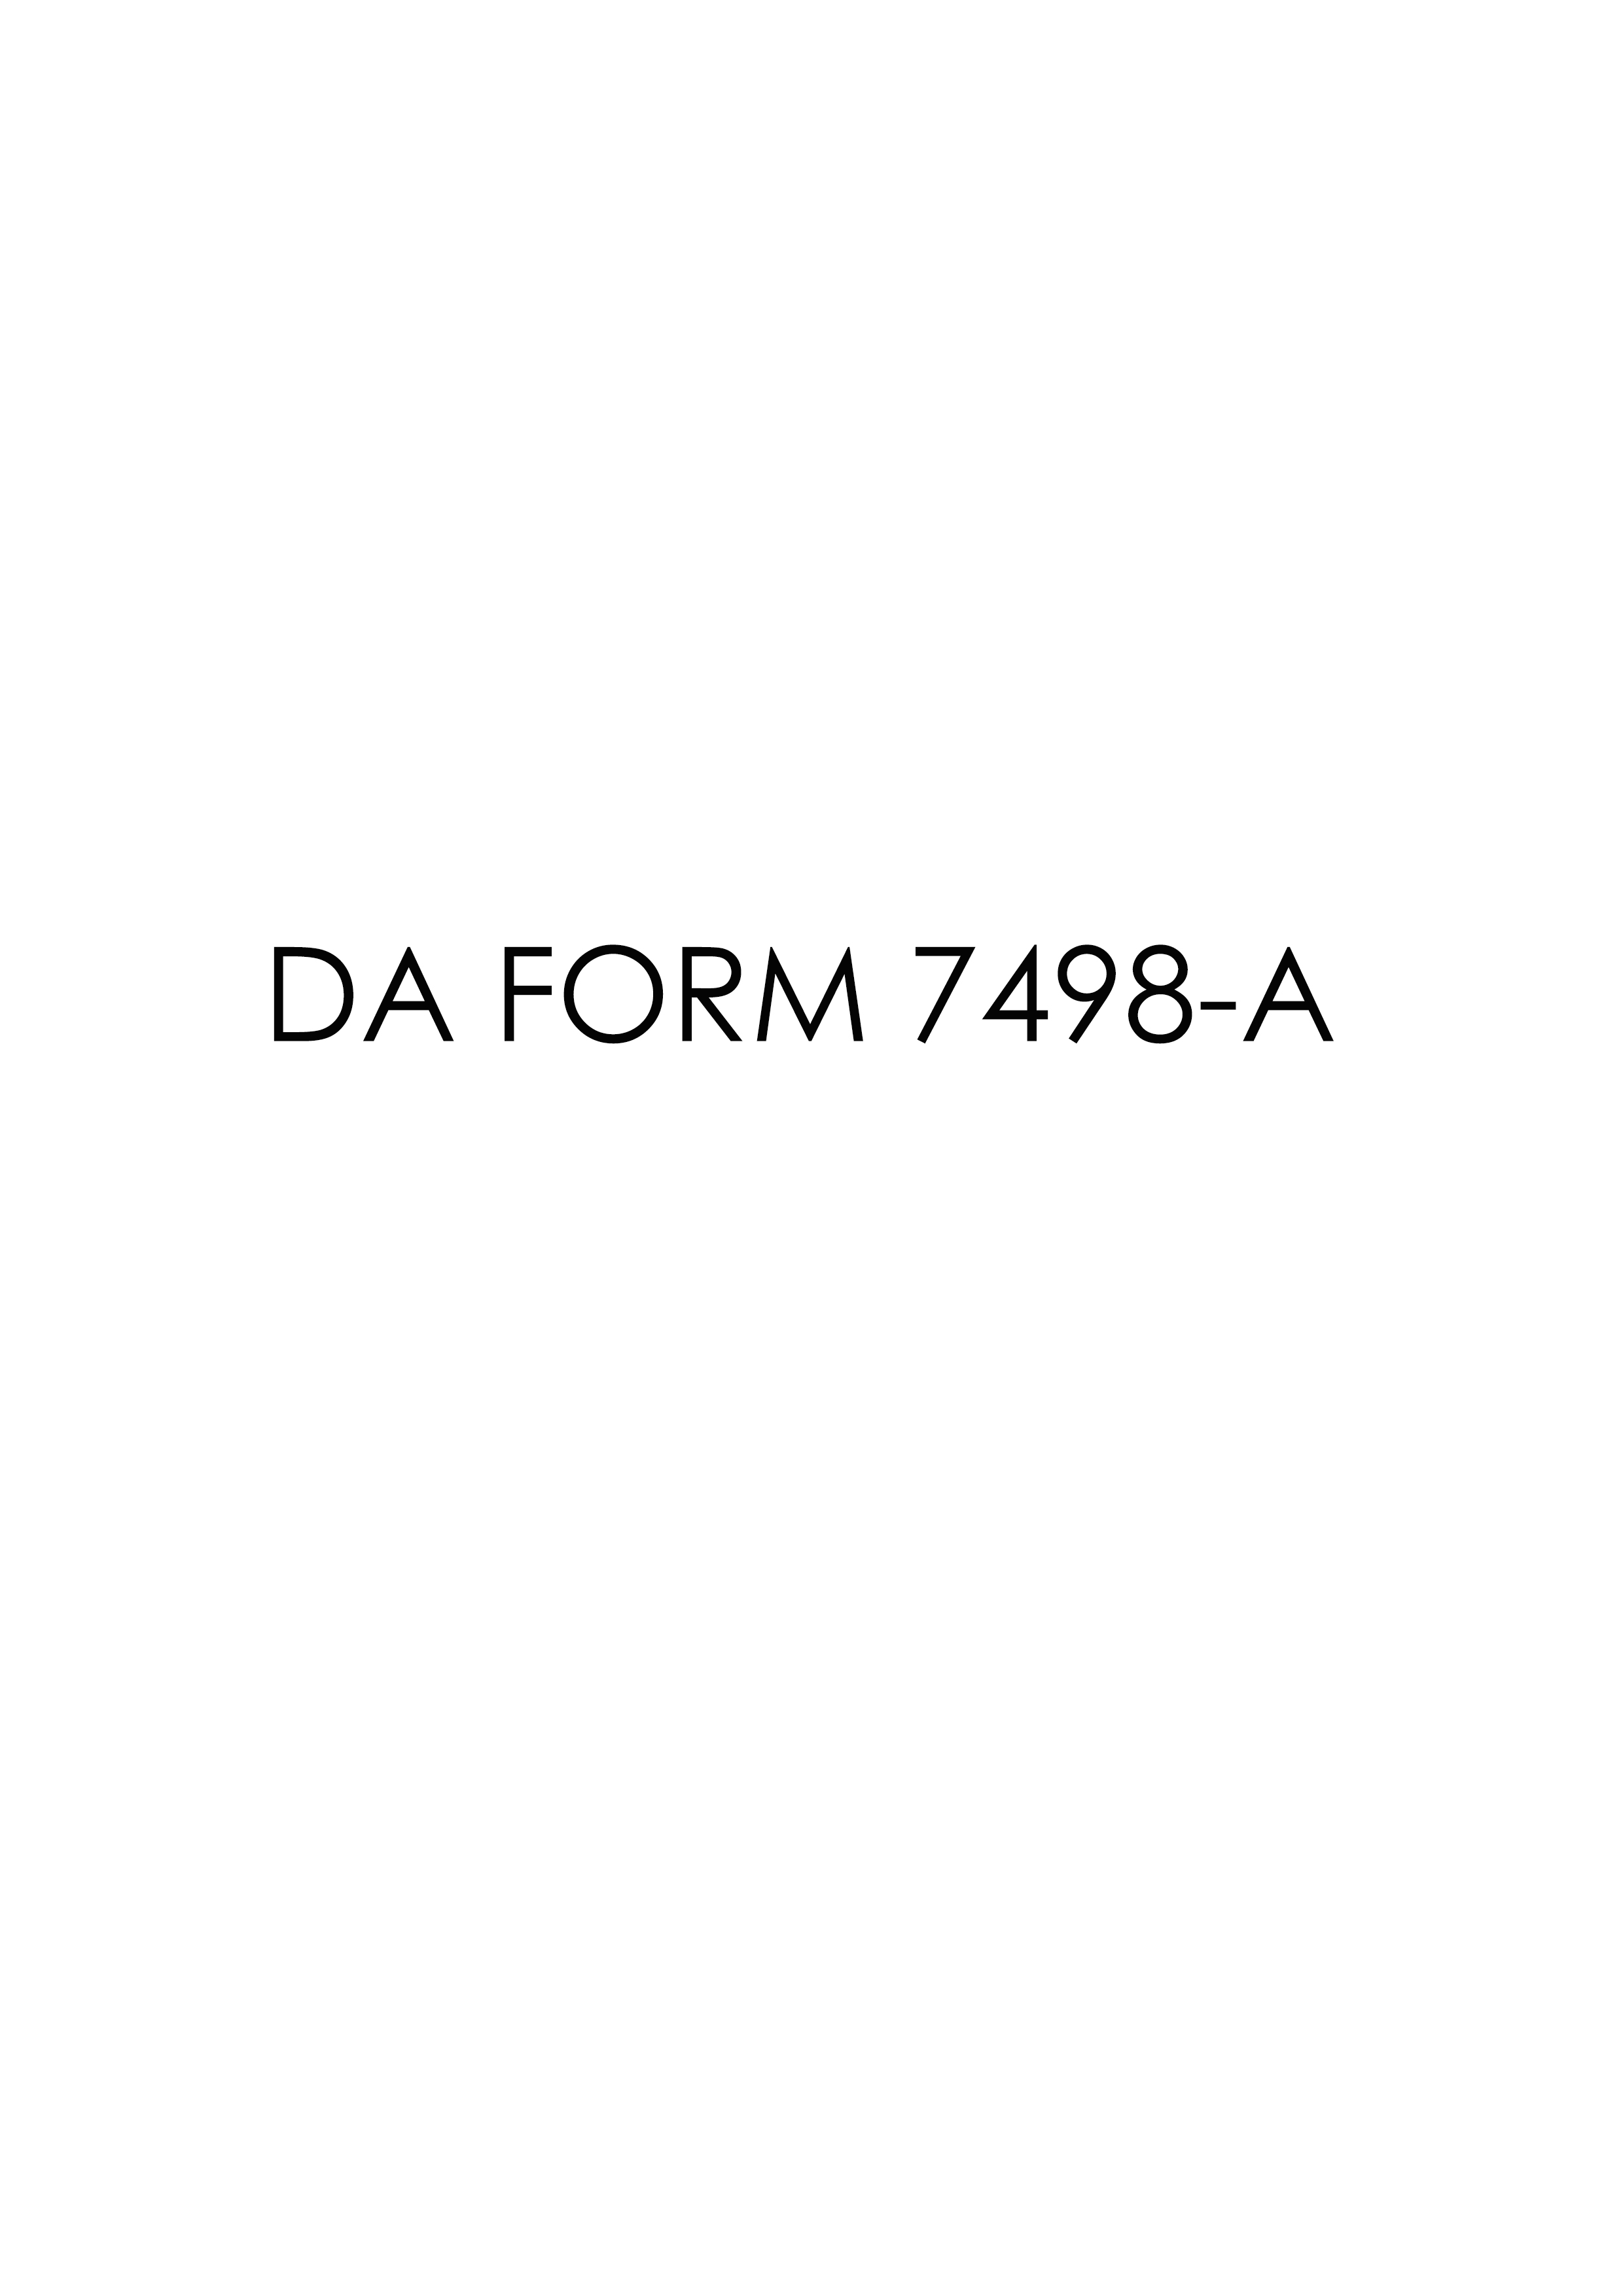 da Form 7498-A fillable